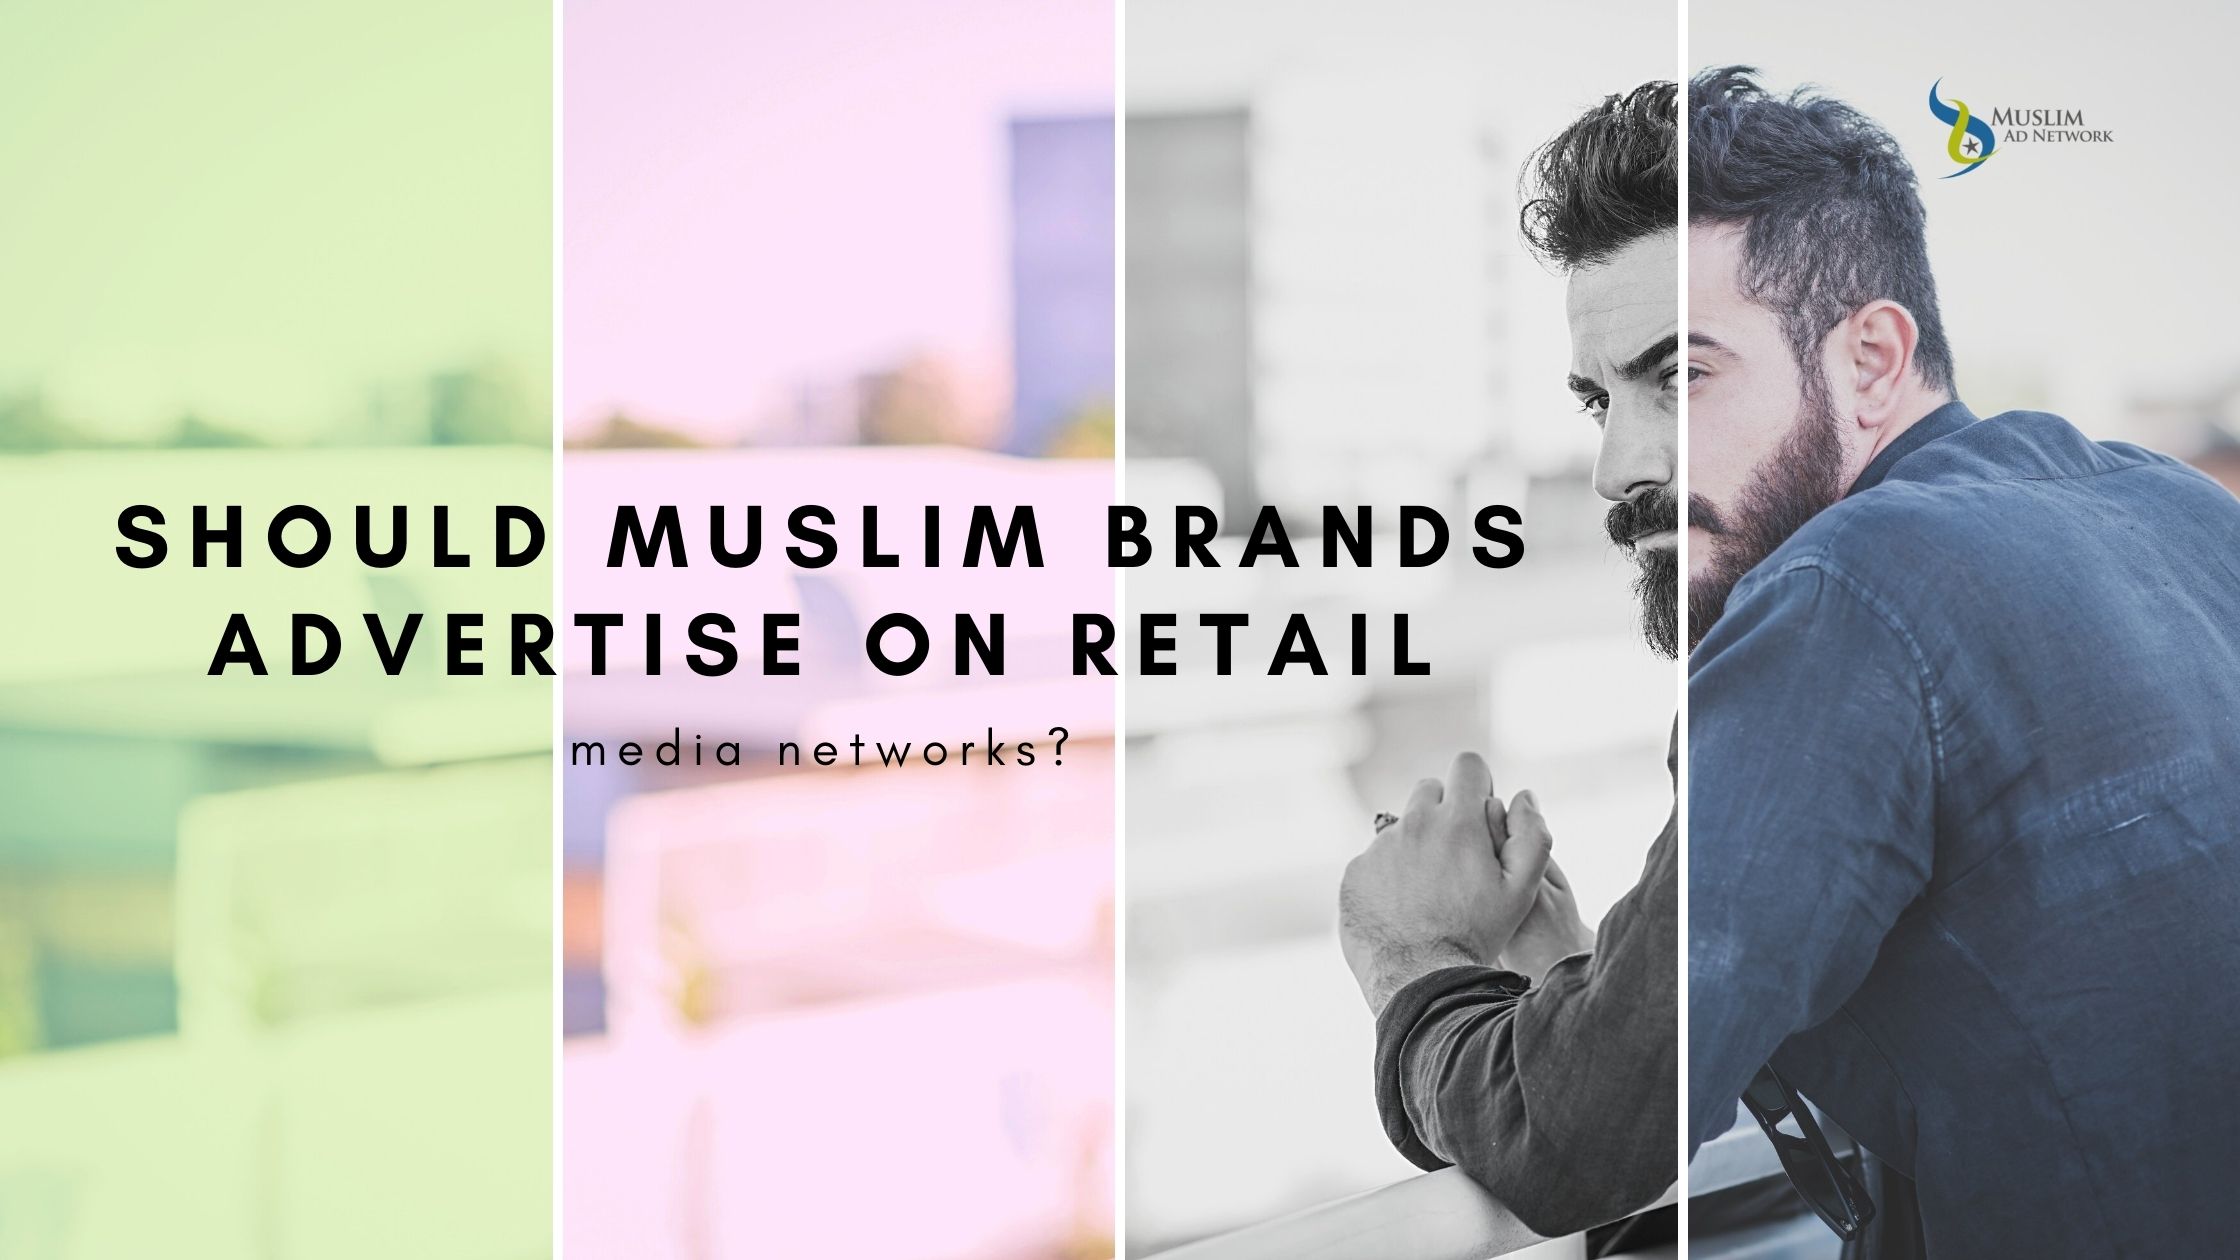 Muslim brands